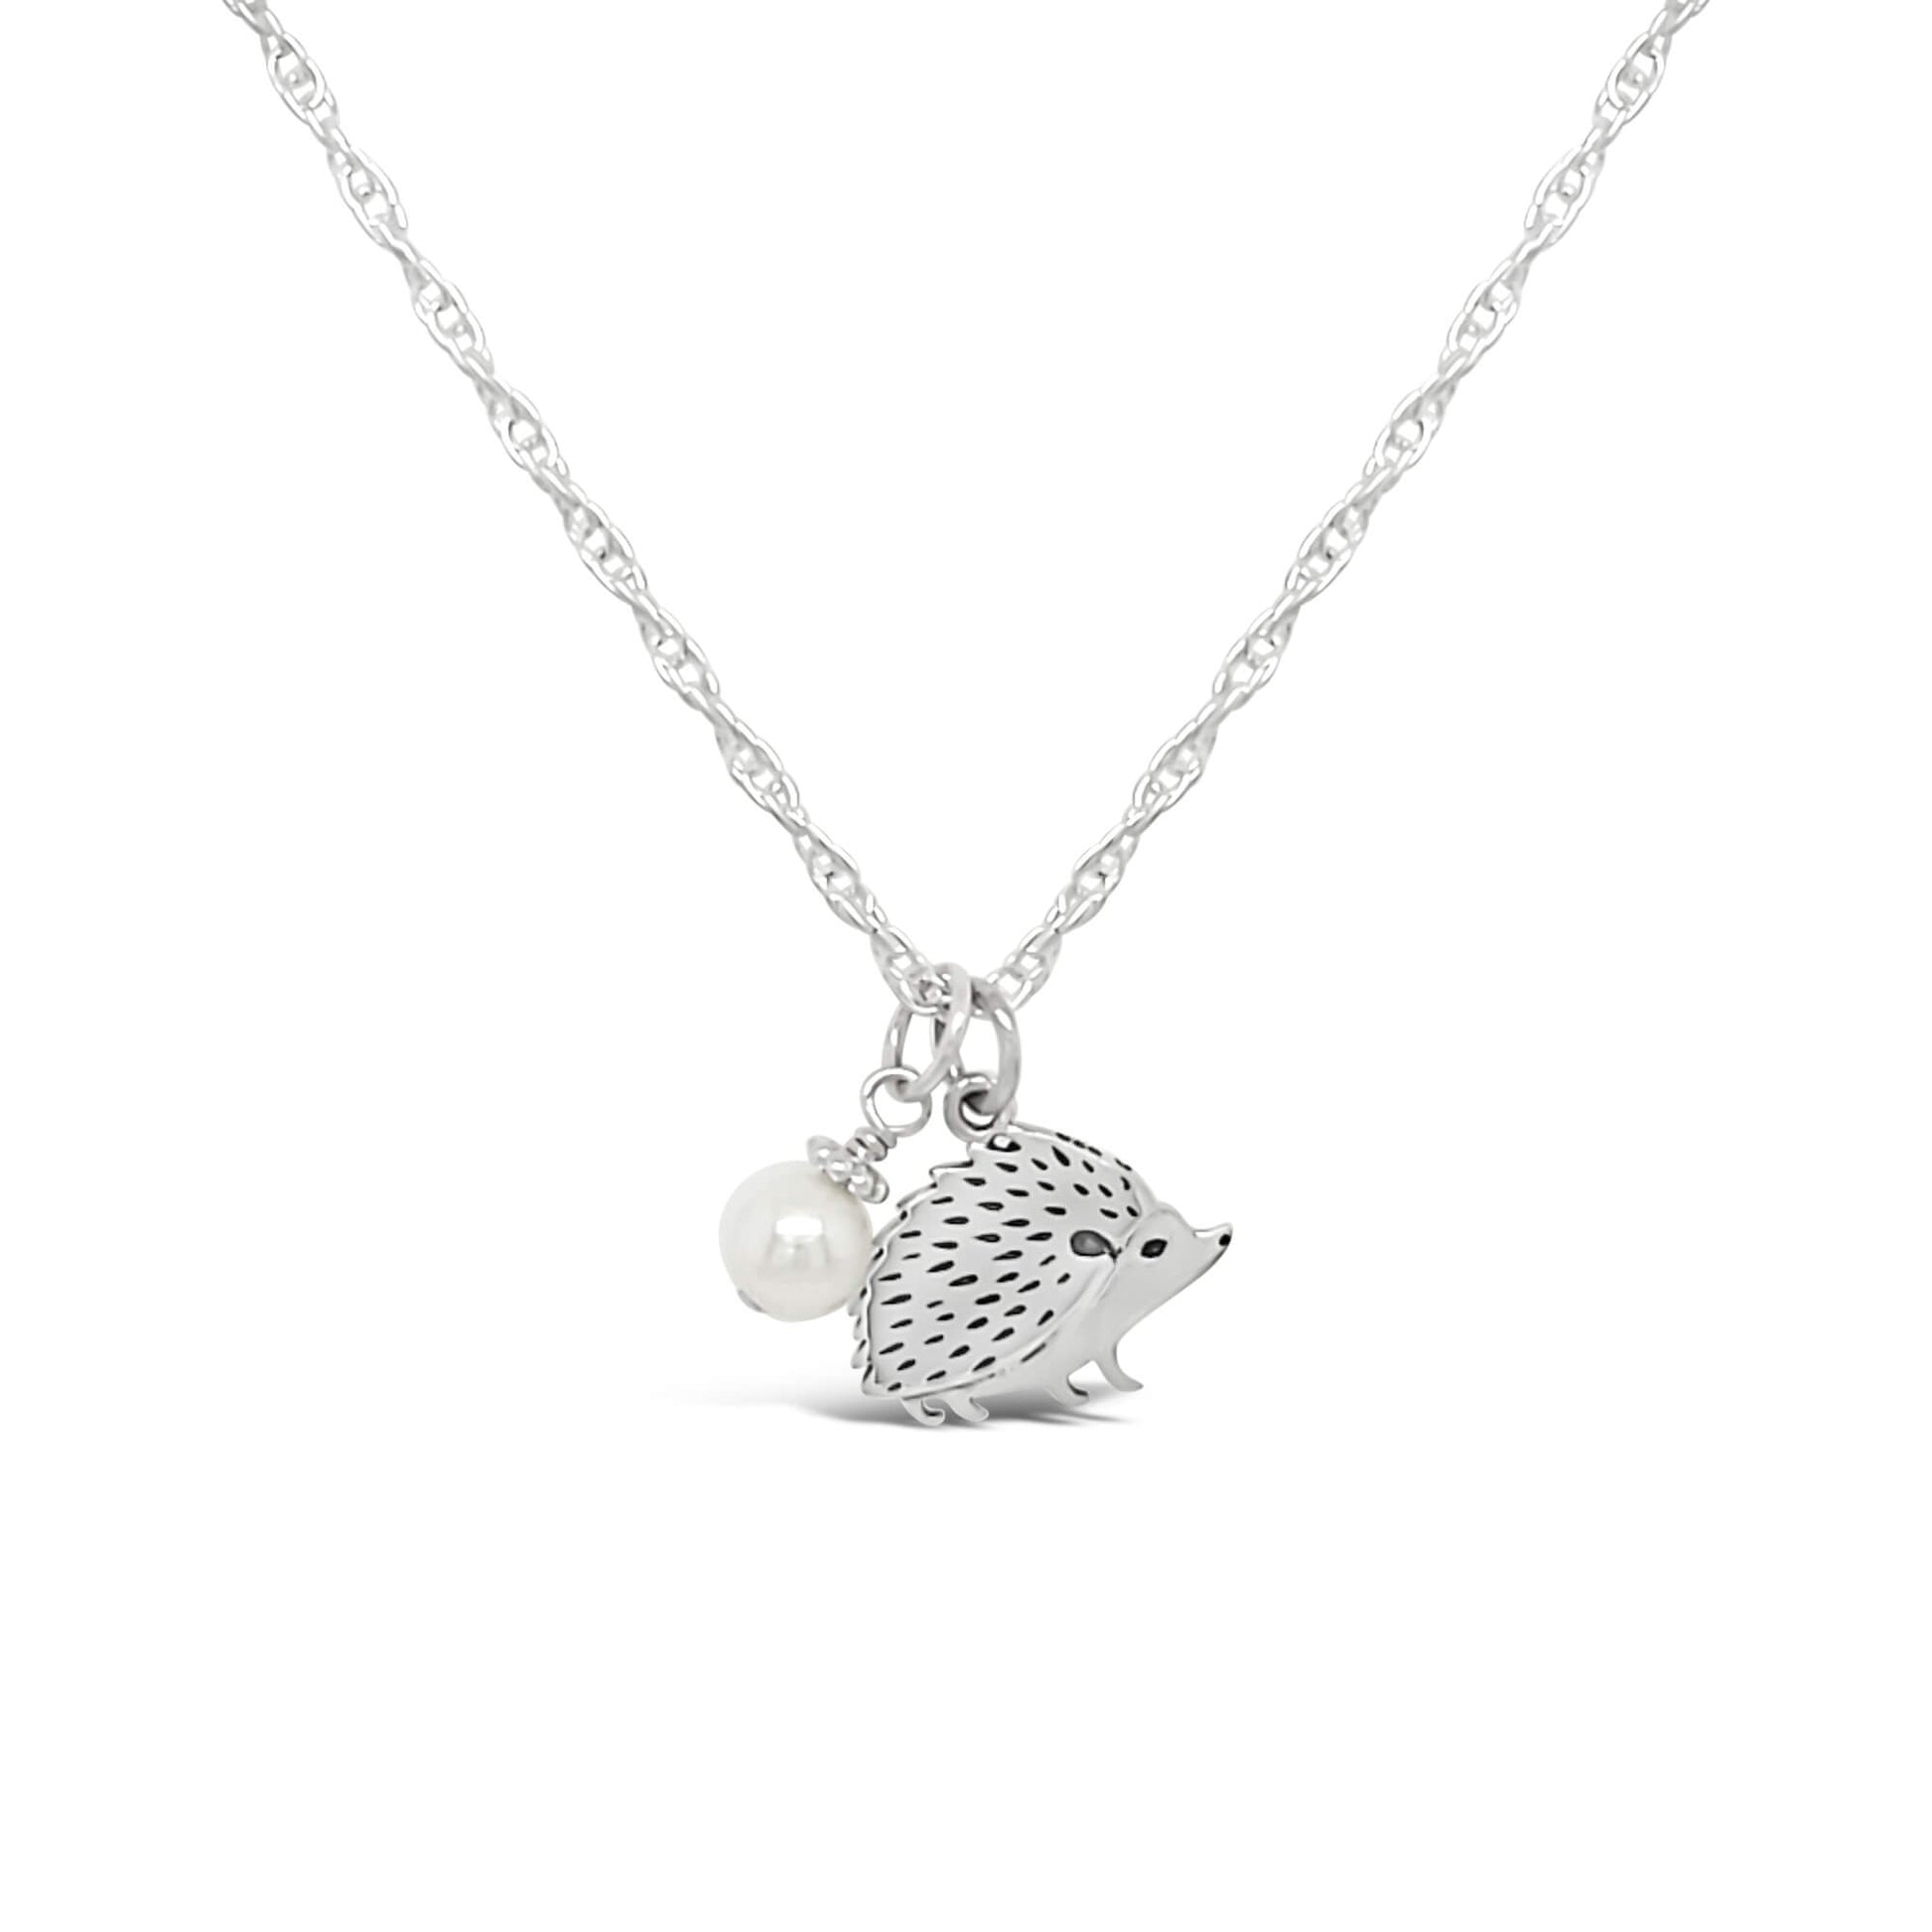 Hedgehog necklace.